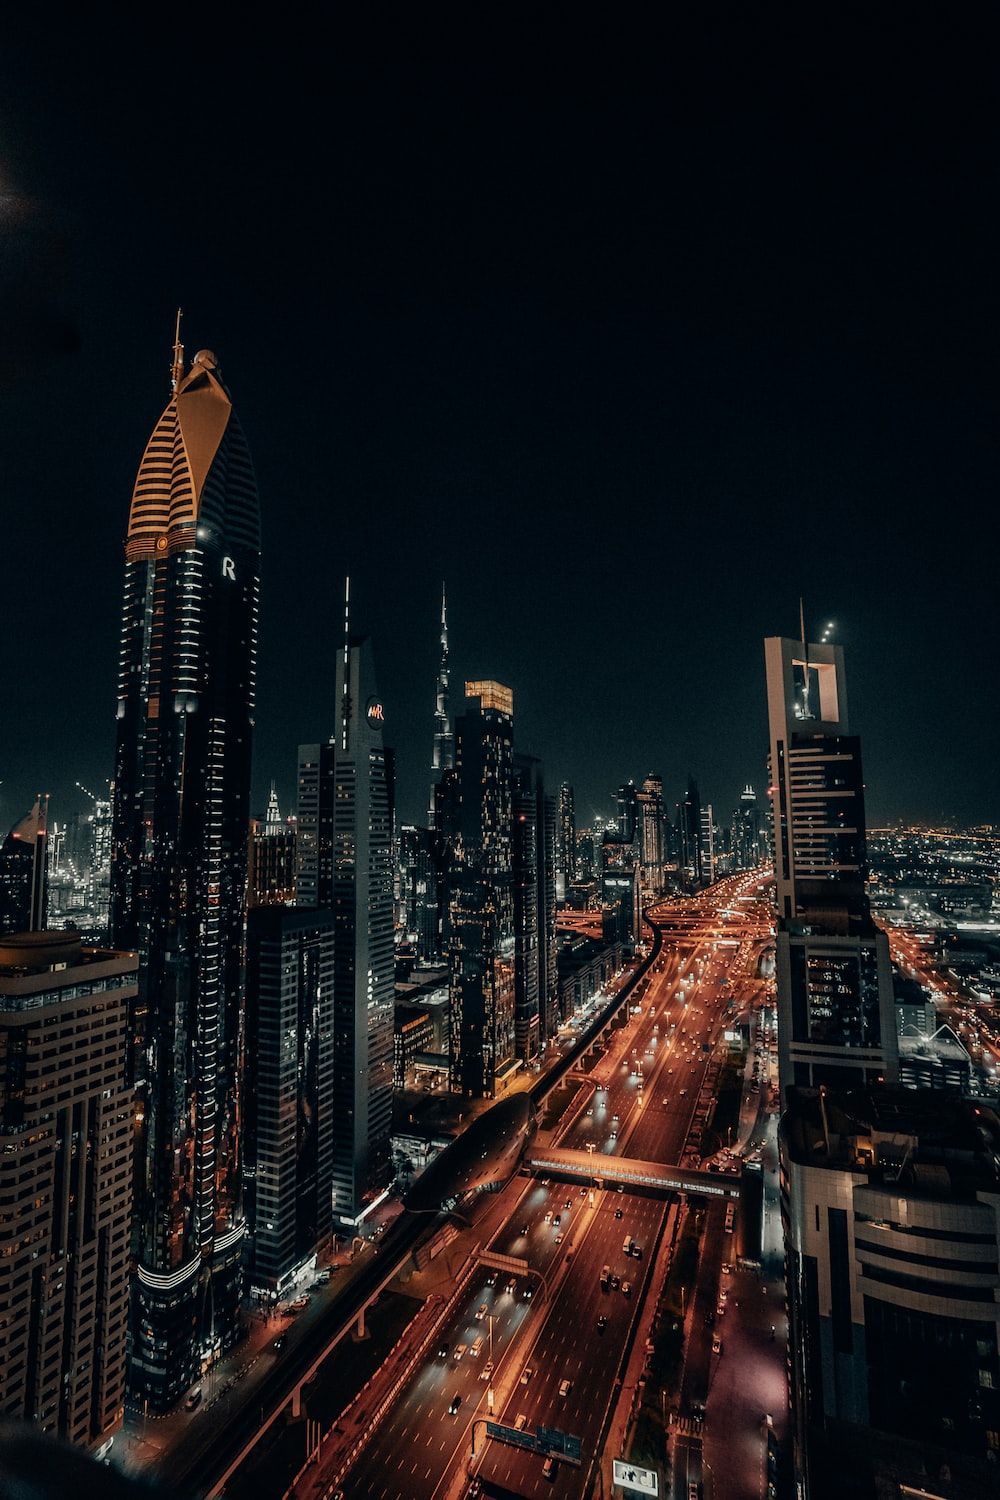 Dubai Night Picture. Download Free Image